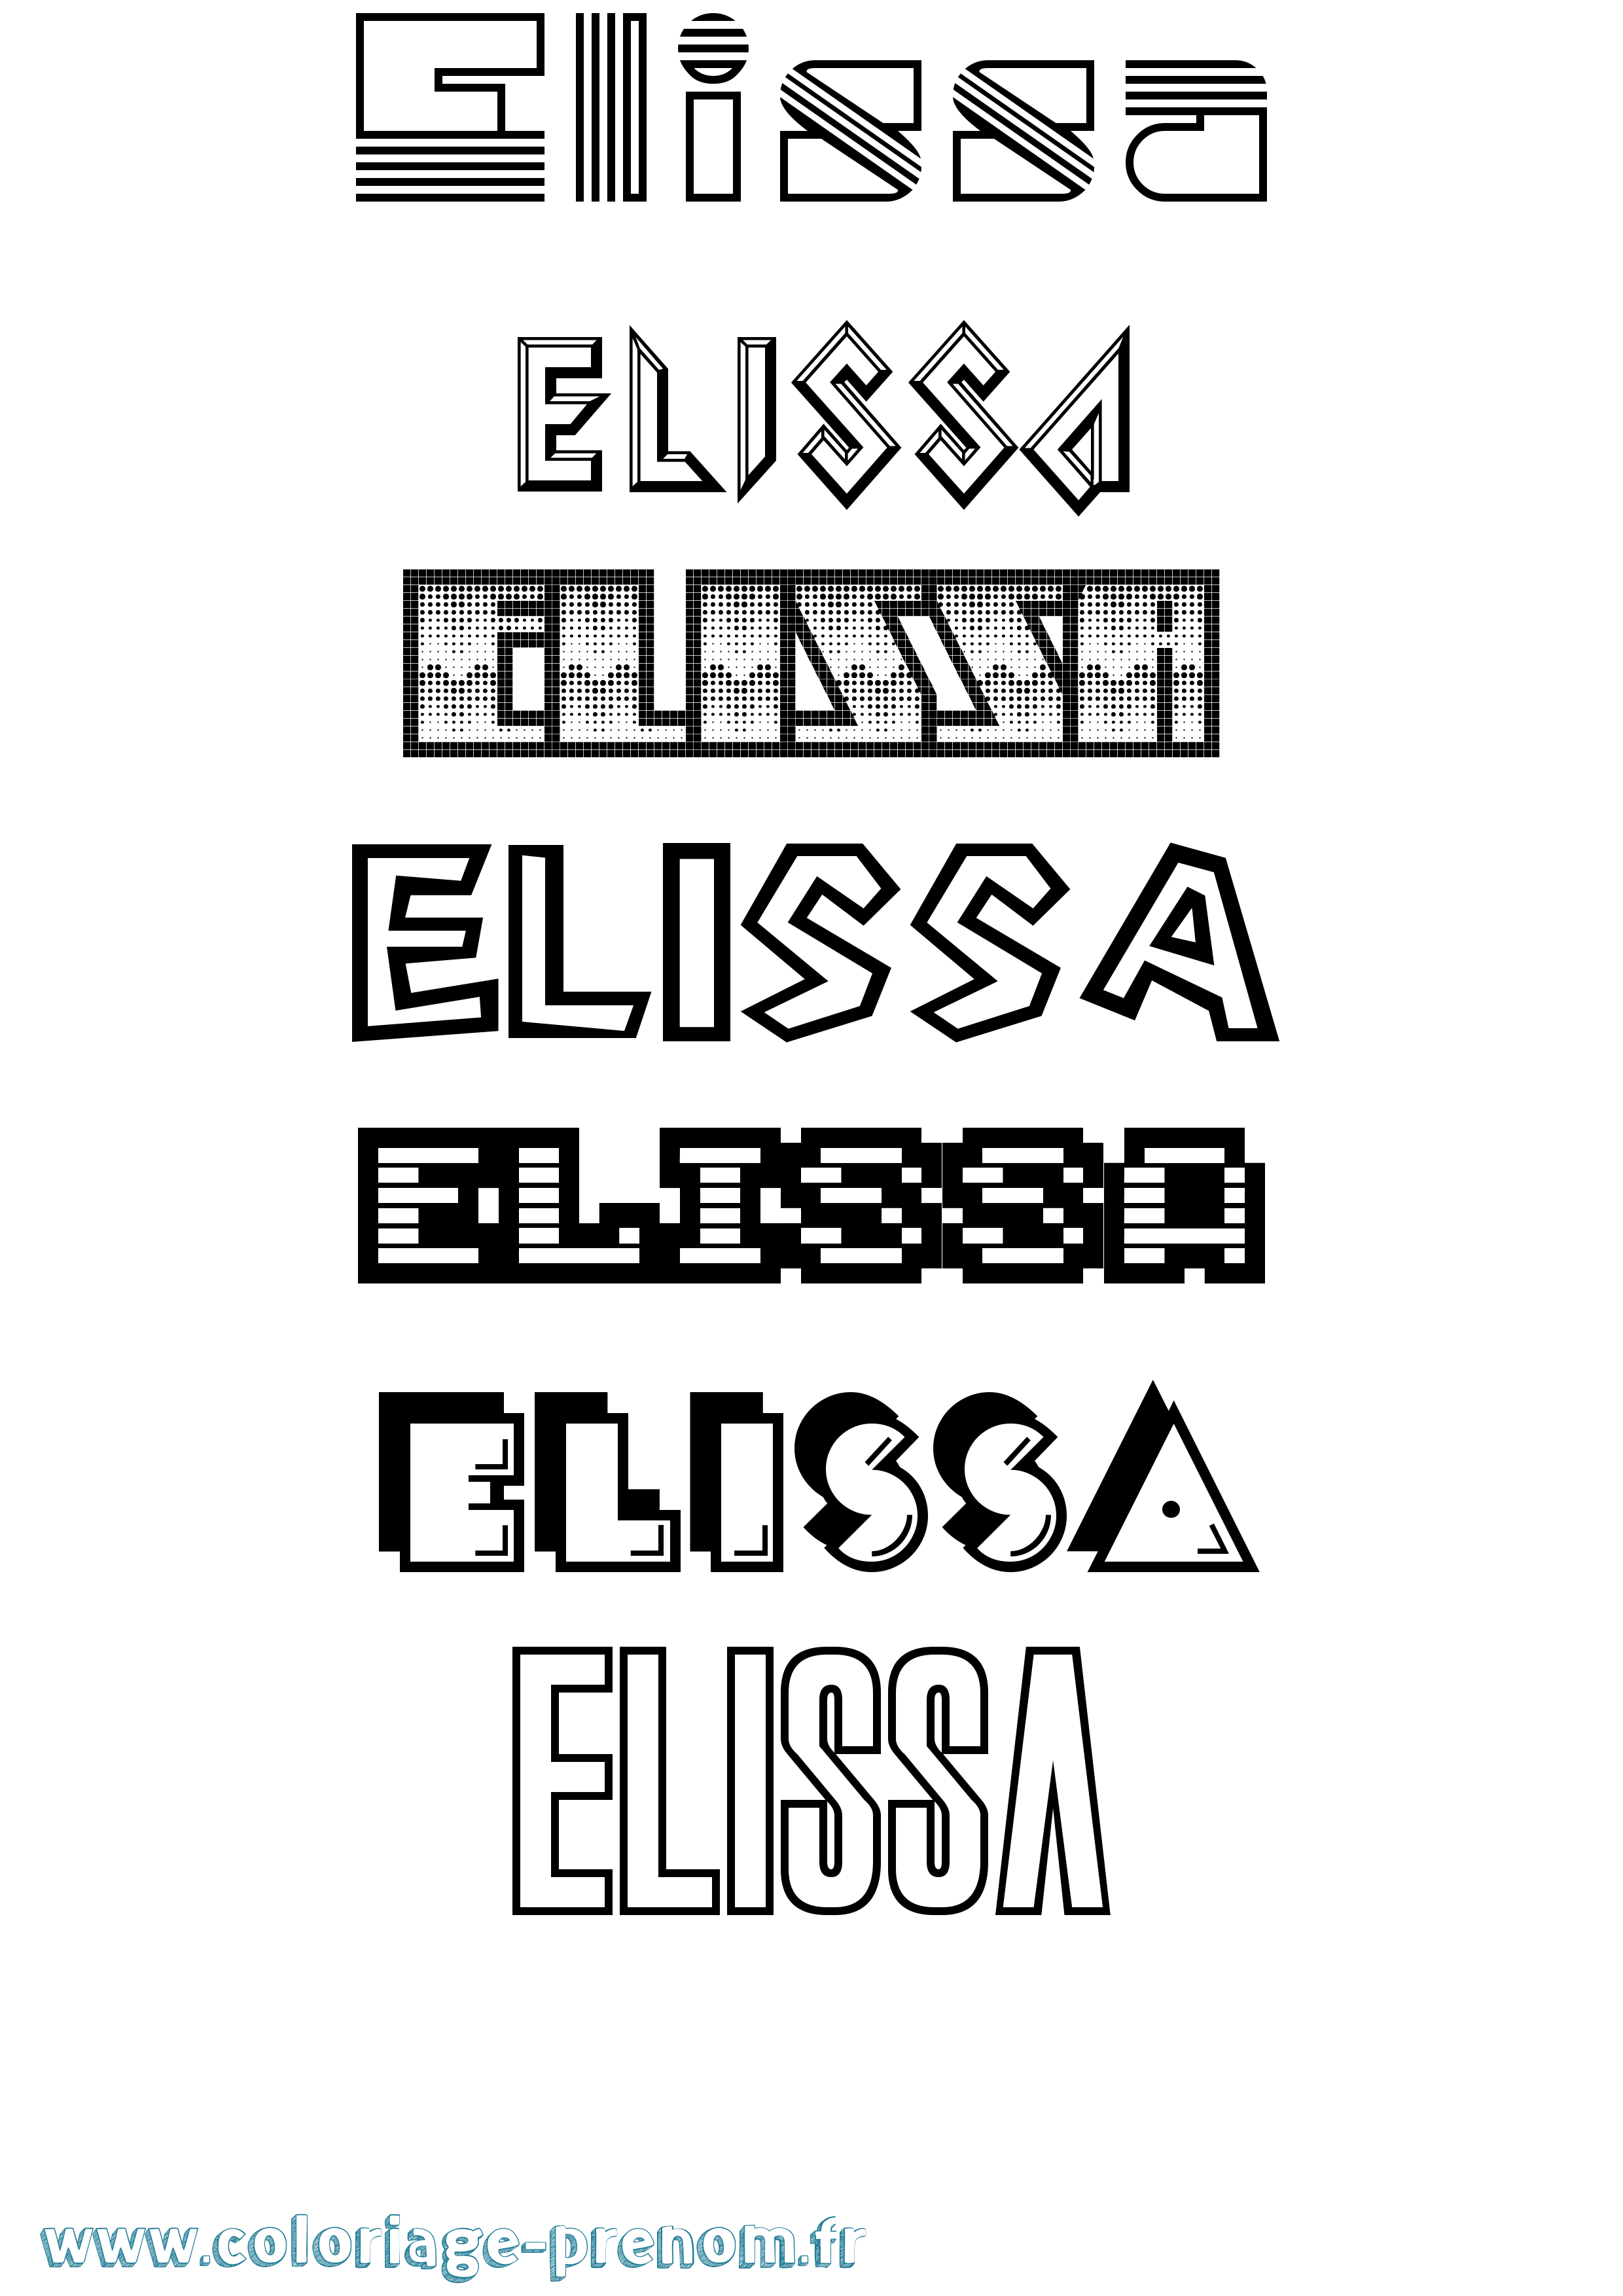 Coloriage prénom Elissa